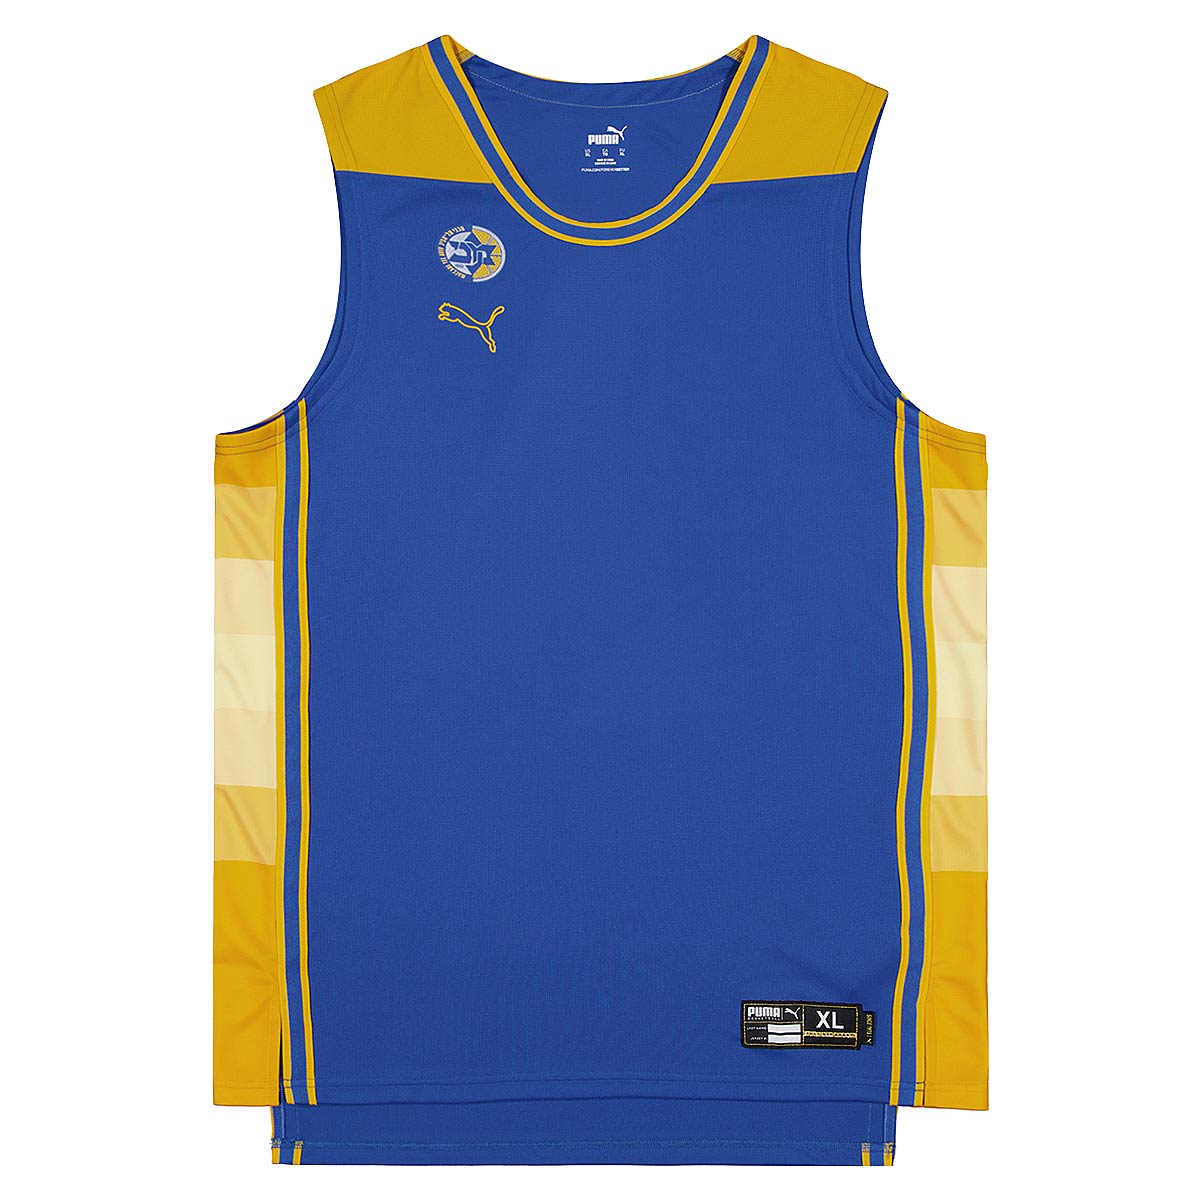 Image of Puma Maccabi Tel Aviv Basketball Game Jersey, Nautical Blue